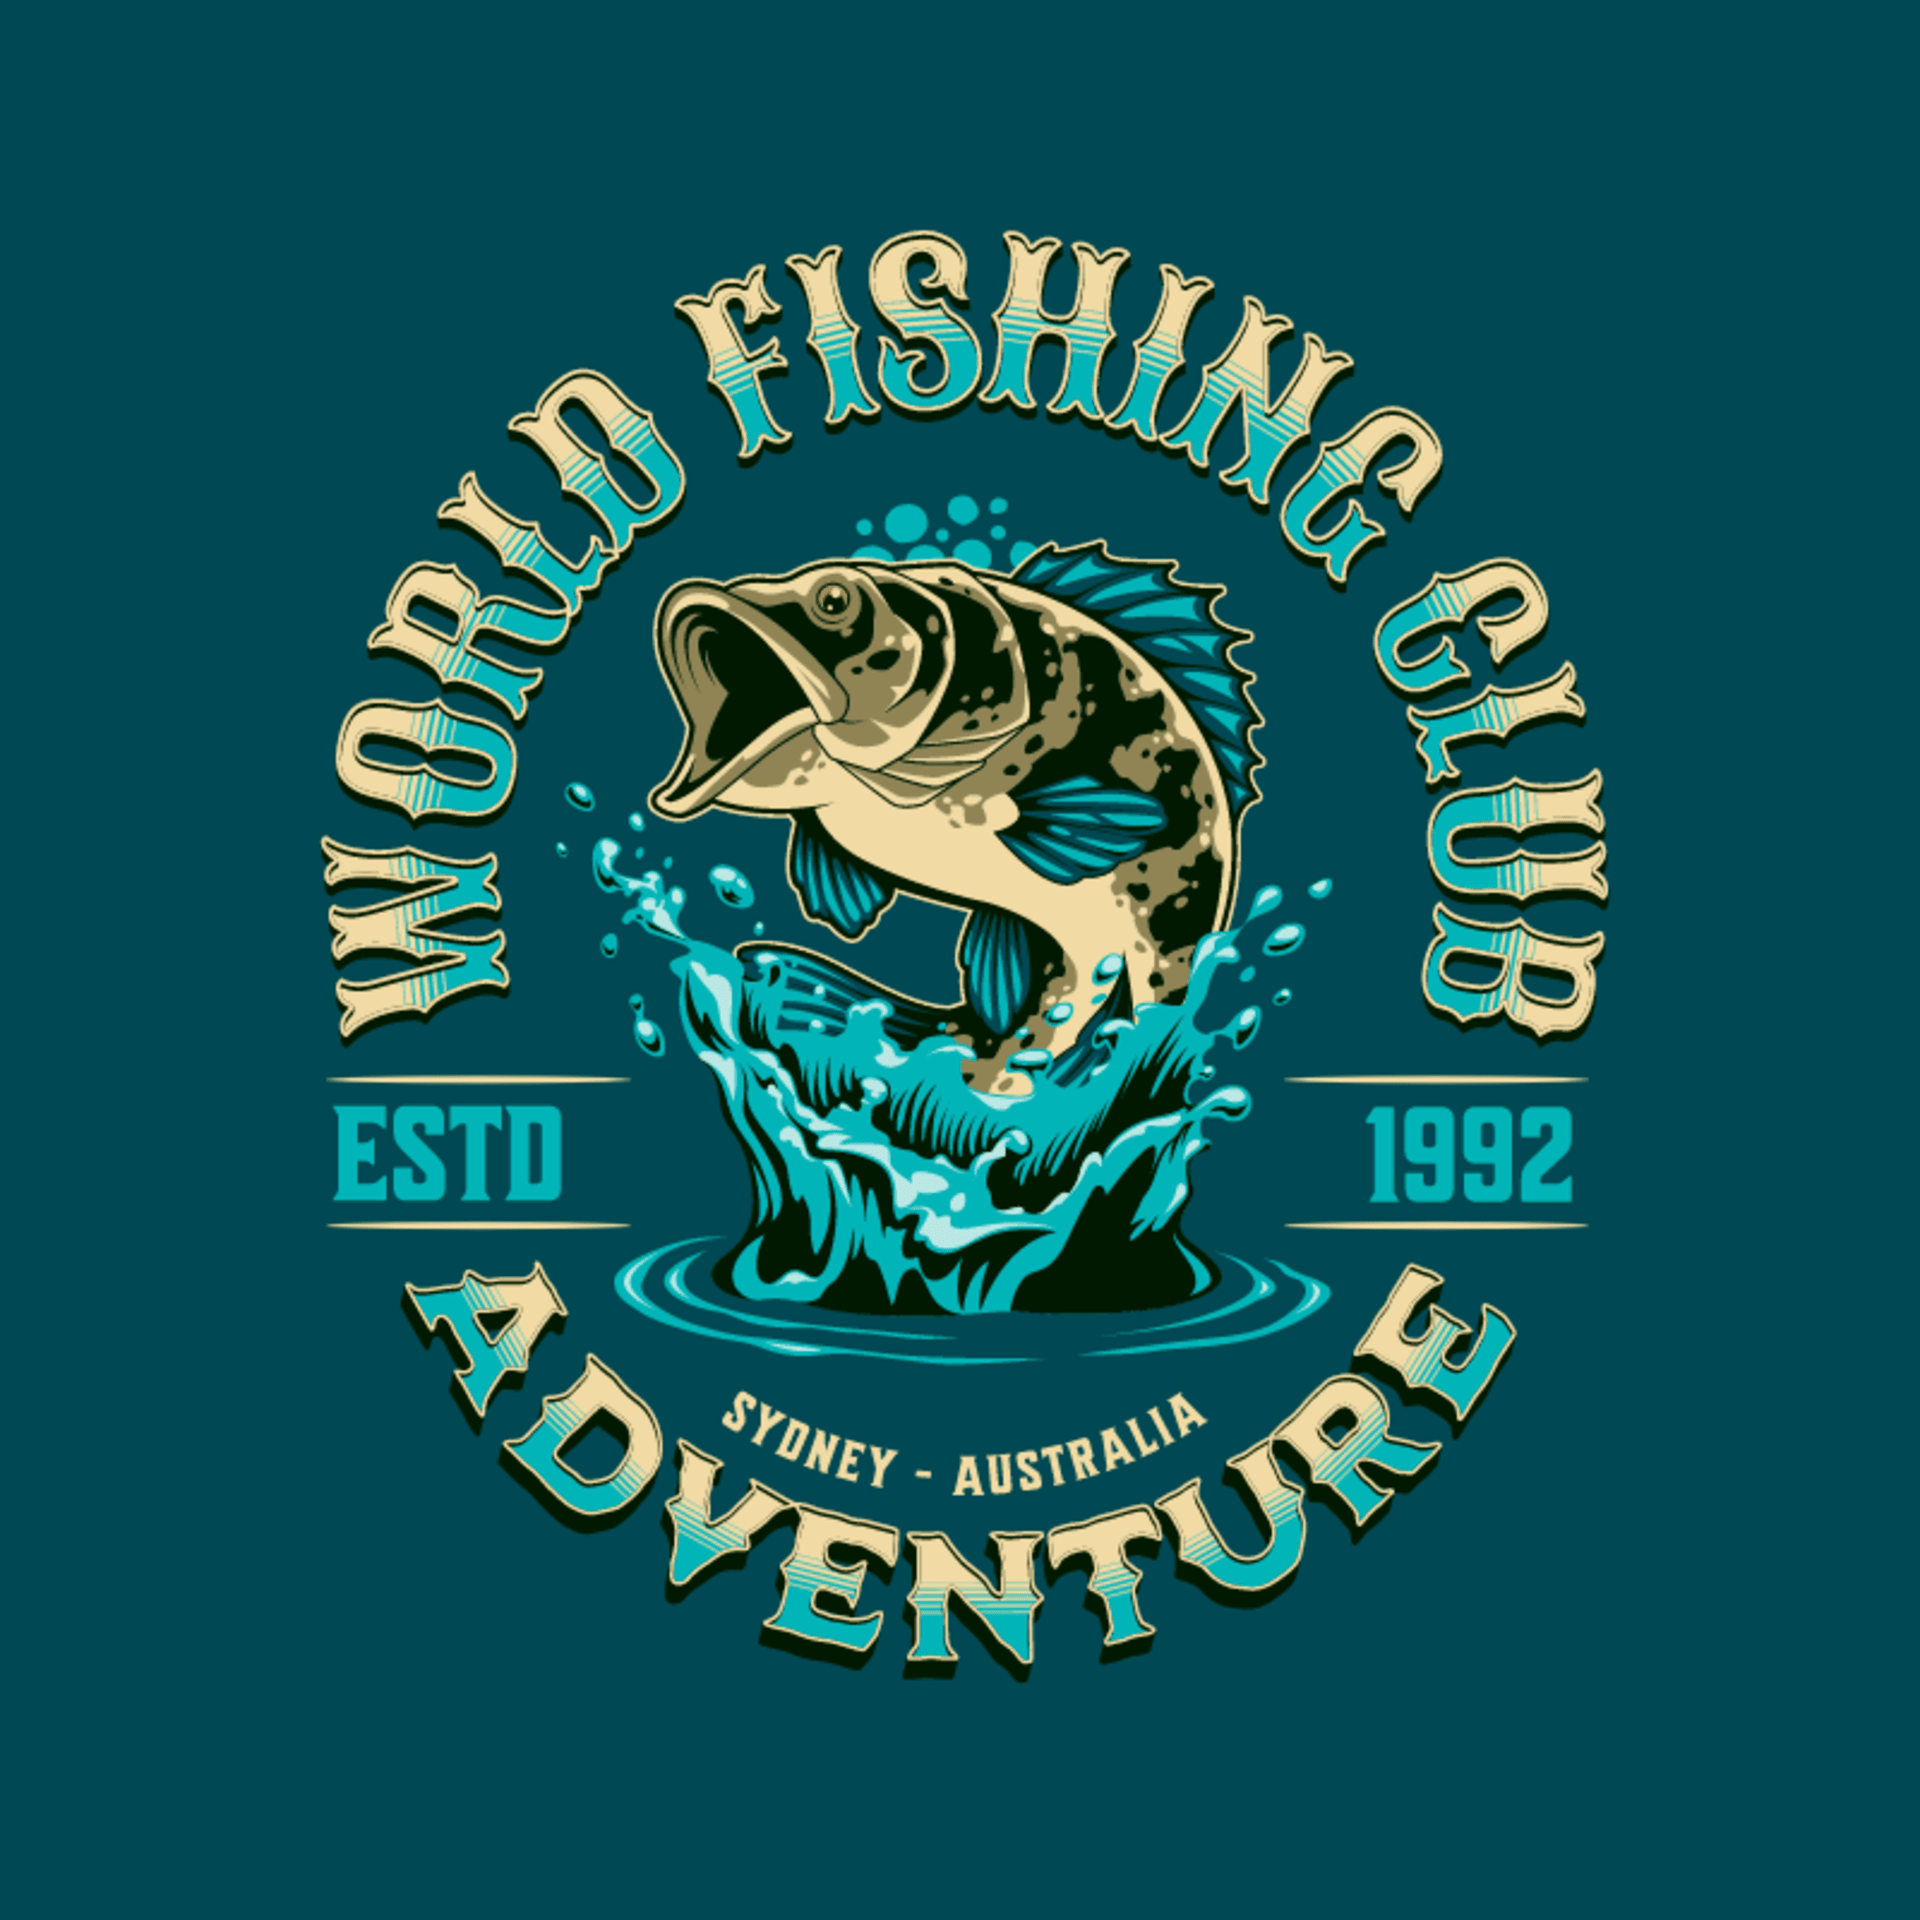 Fishing T-shirt Designs cover image.